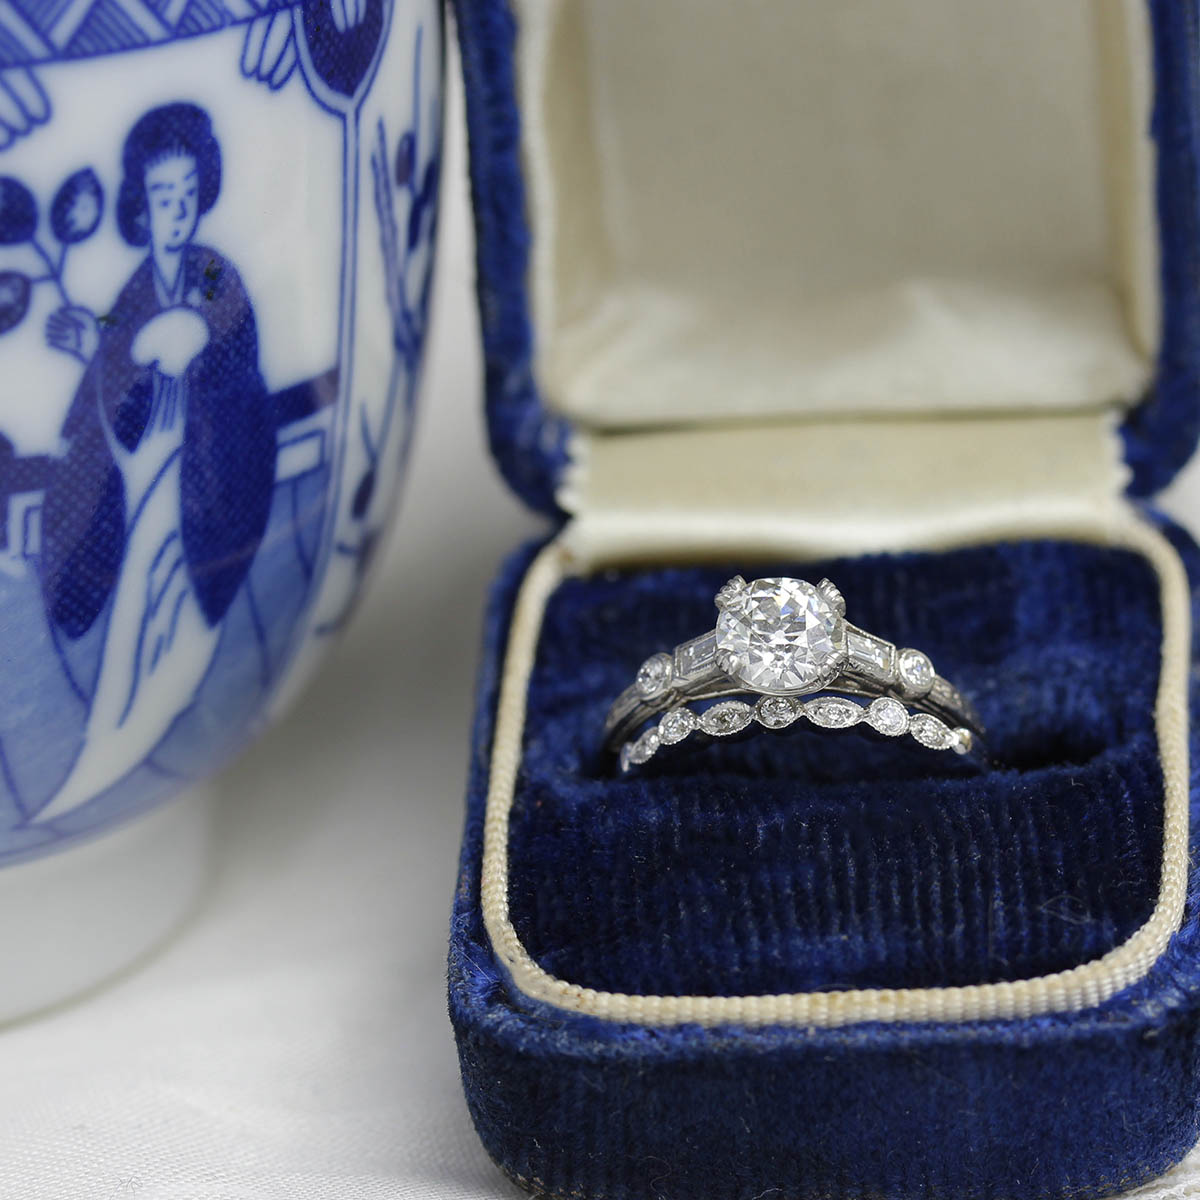 Replica Art Deco Engagement Ring #3050-8